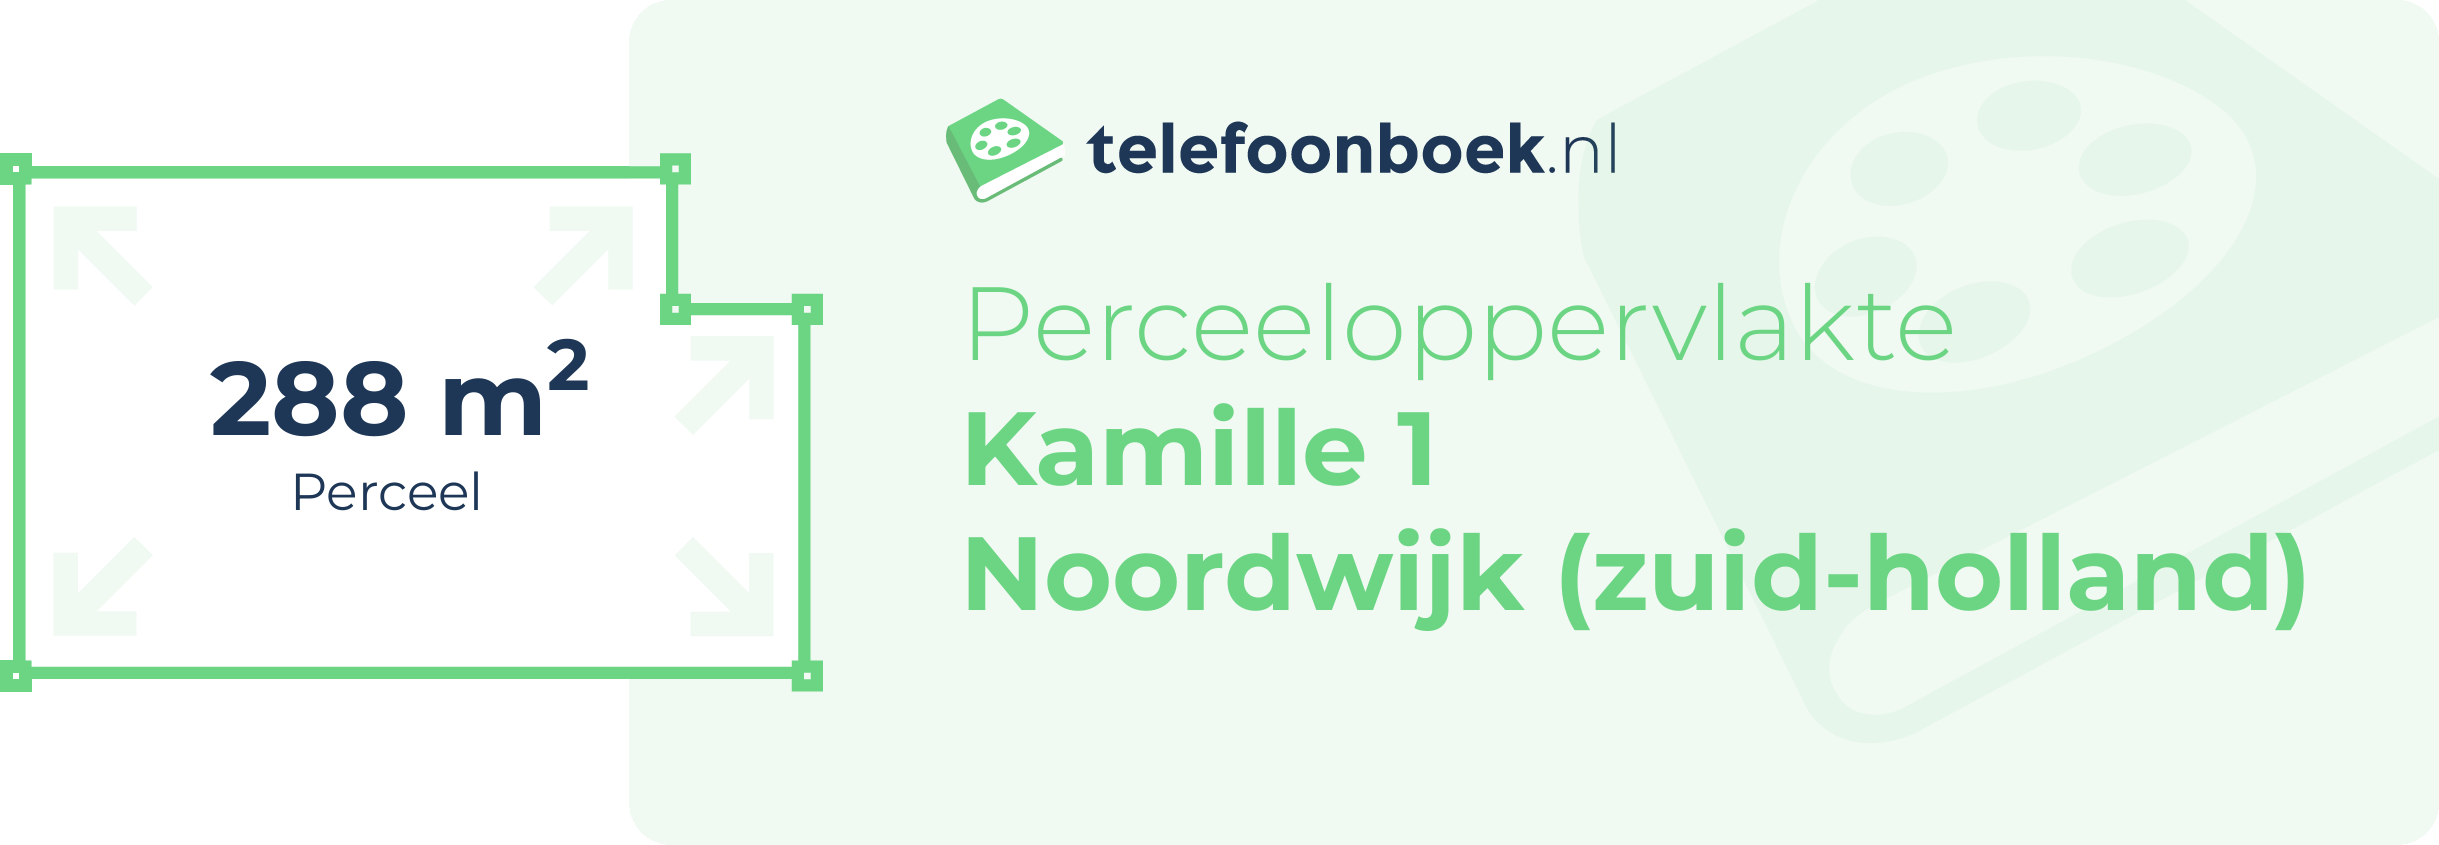 Perceeloppervlakte Kamille 1 Noordwijk (Zuid-Holland)